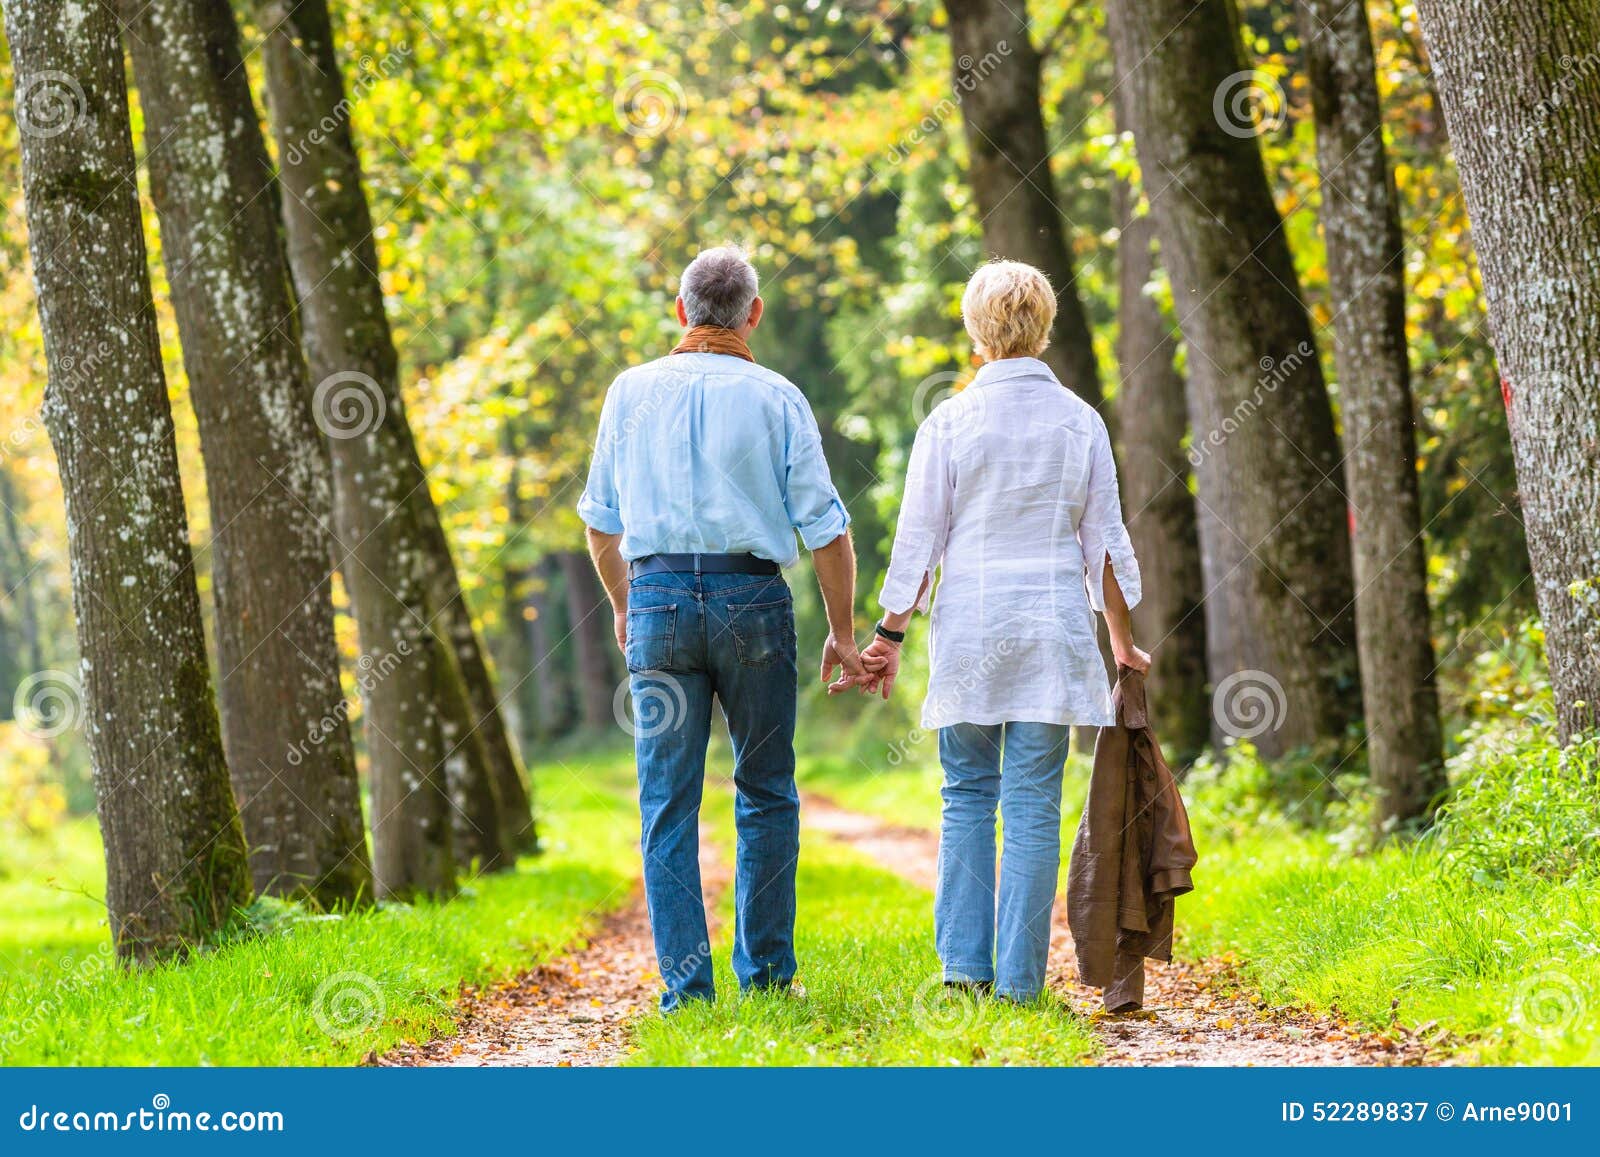 https://thumbs.dreamstime.com/z/senior-man-woman-holding-hand-walking-couple-women-men-hands-having-walk-autumn-forest-52289837.jpg